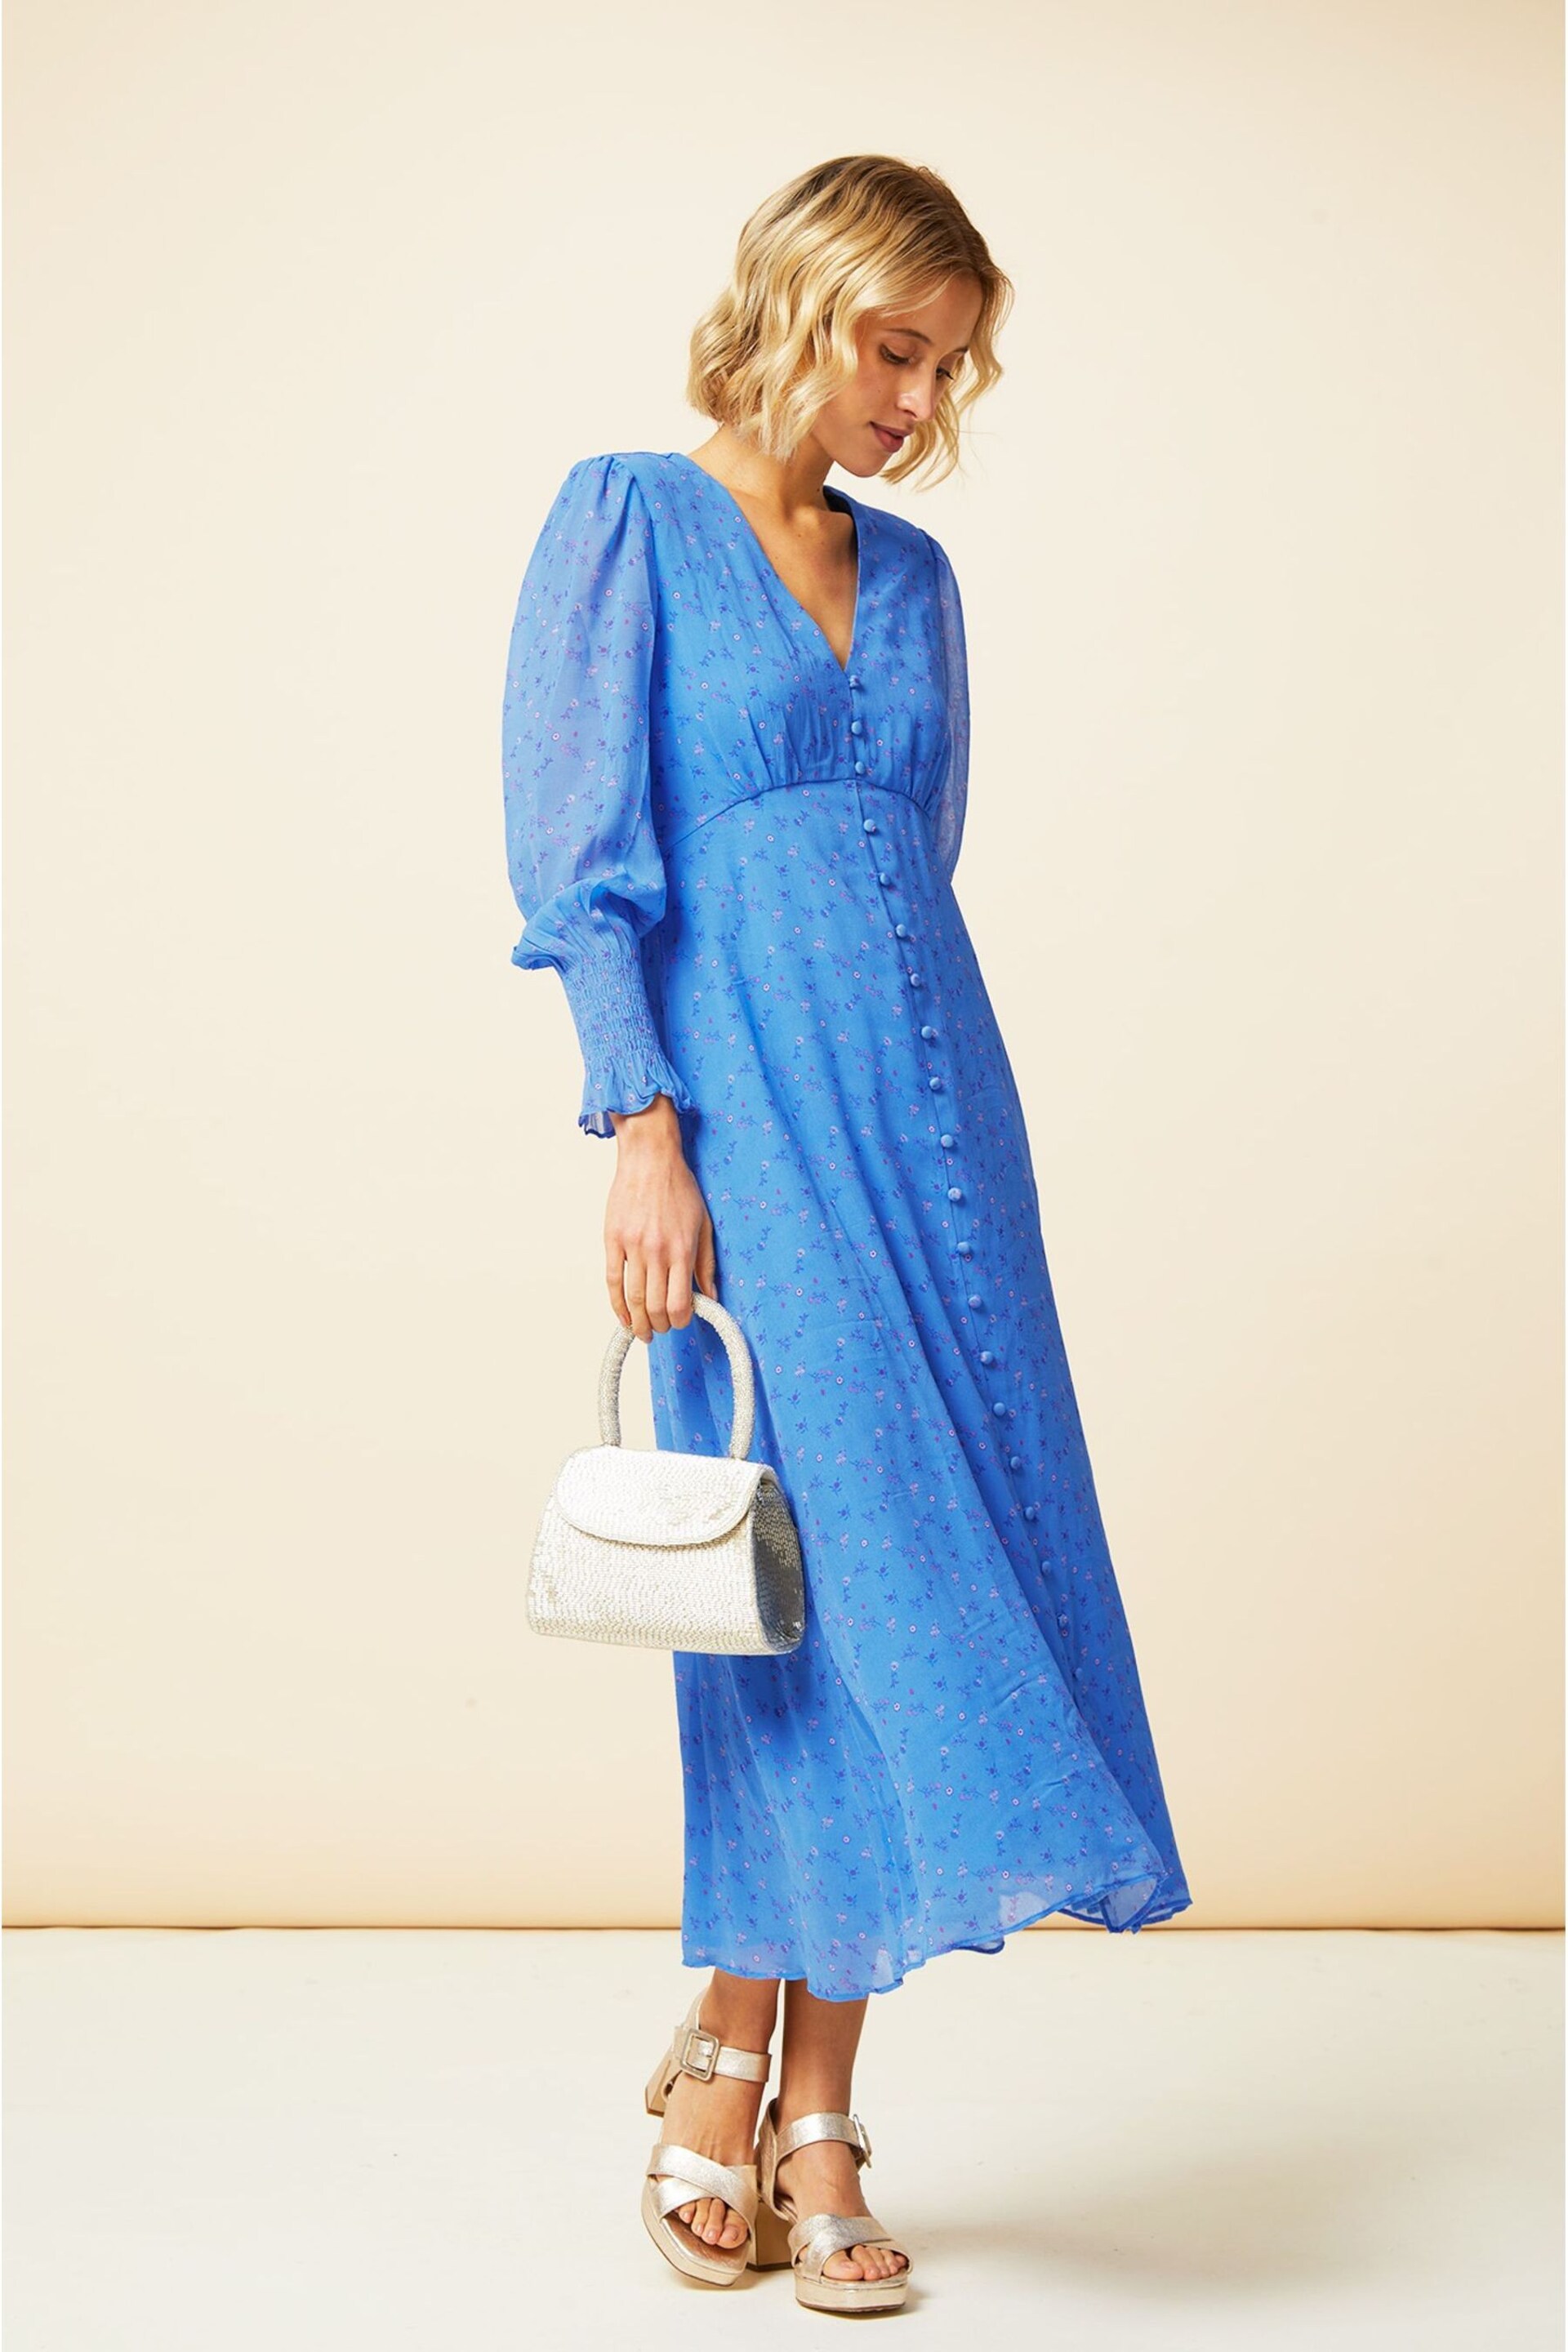 Aspiga Blue Long Sleeve Sally Anne Dress - Image 3 of 4